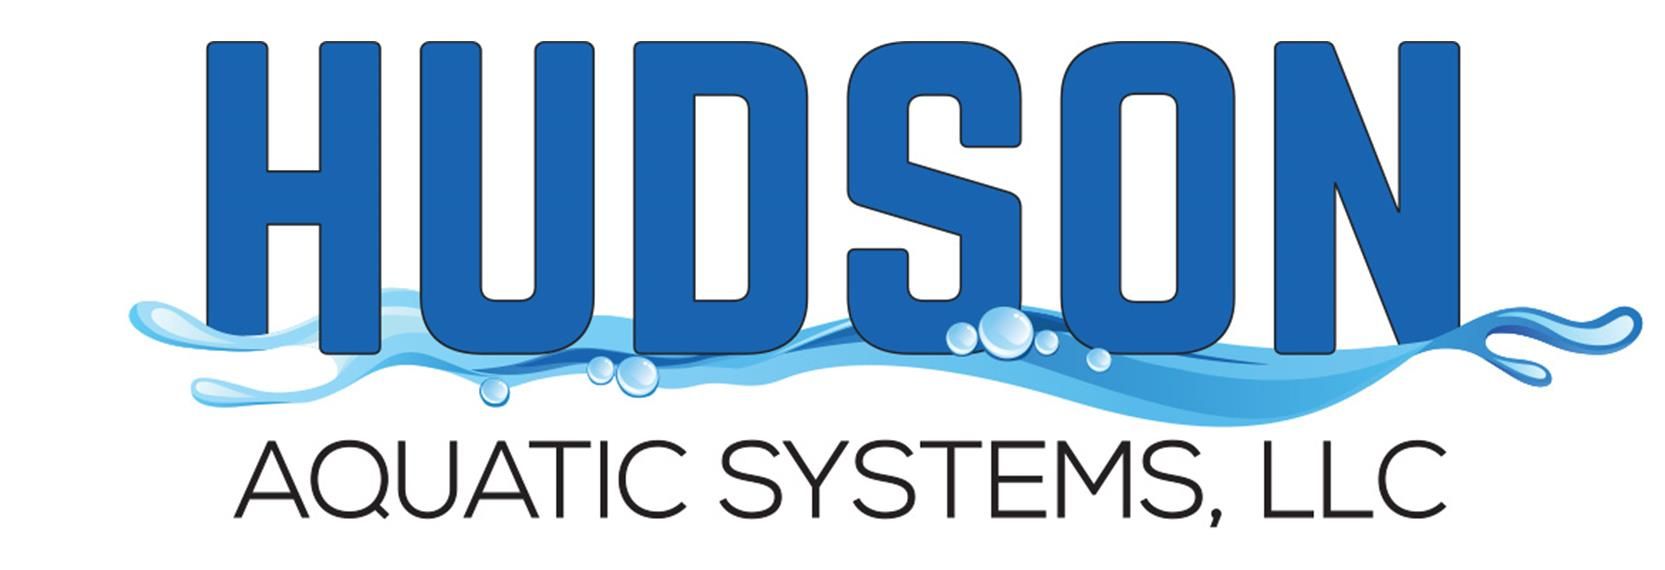 Hudson Aquatic Systems, LLC